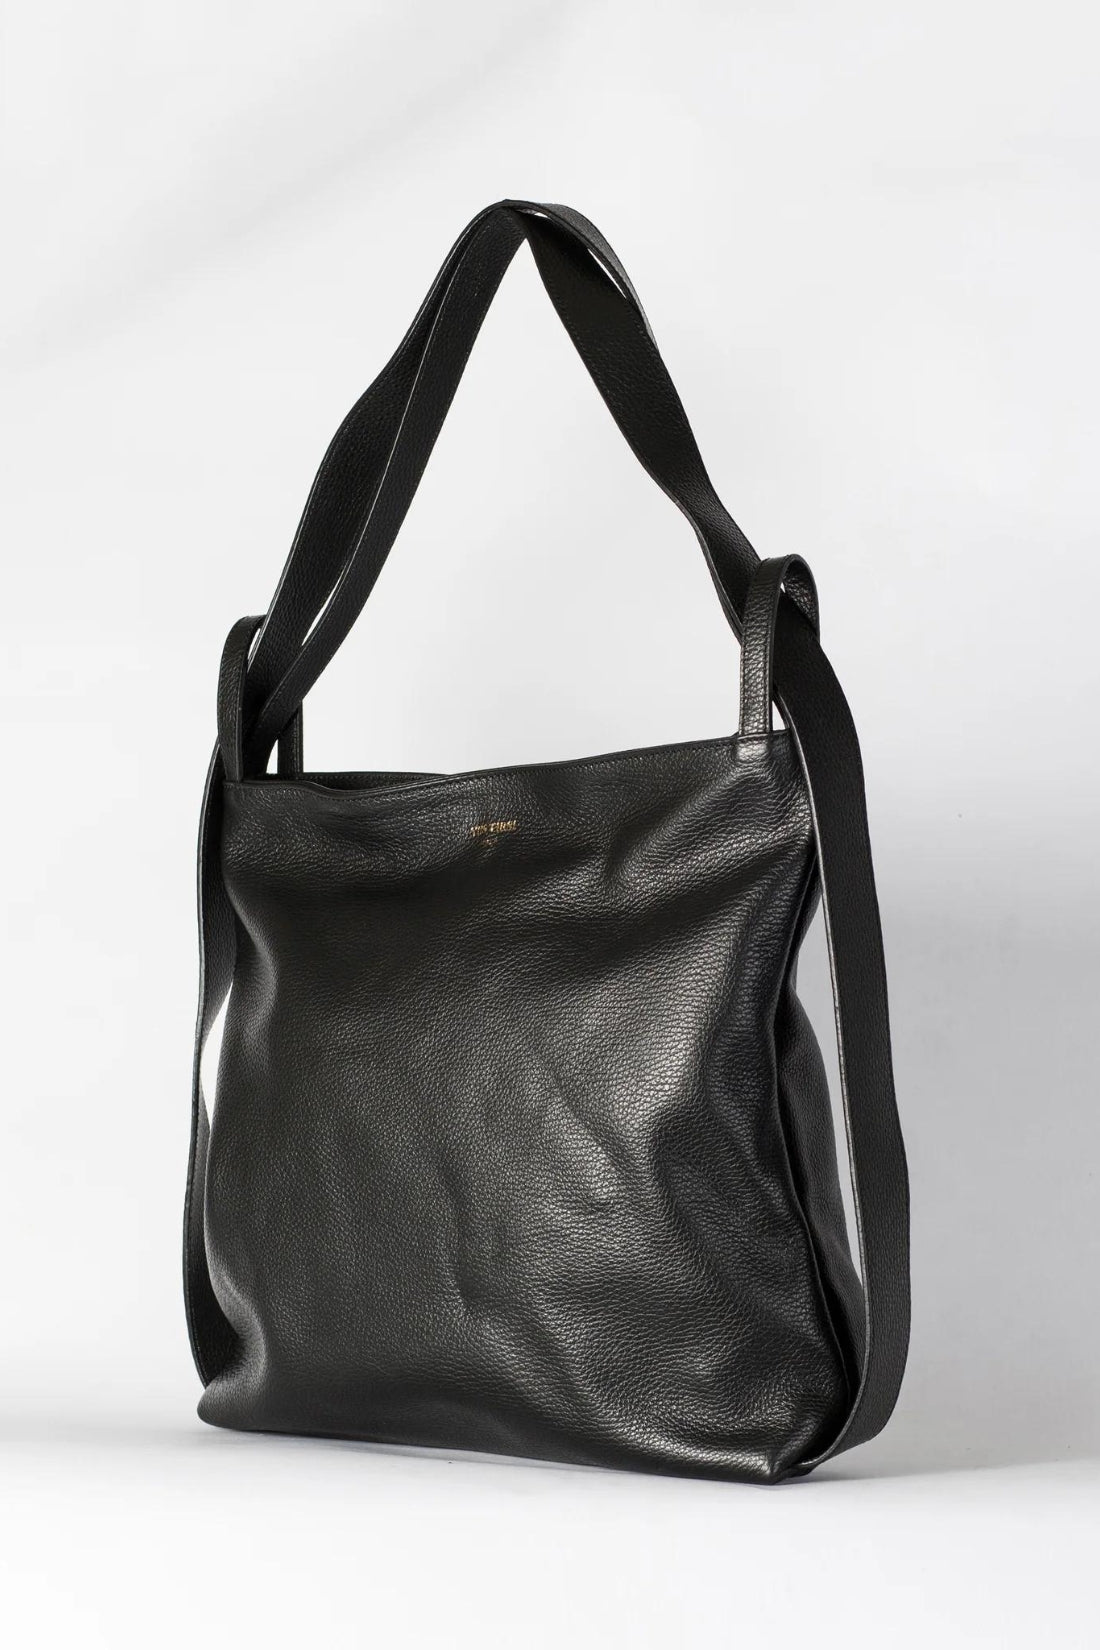 Bella Black 2-in-1 Convertible Backpack Tote